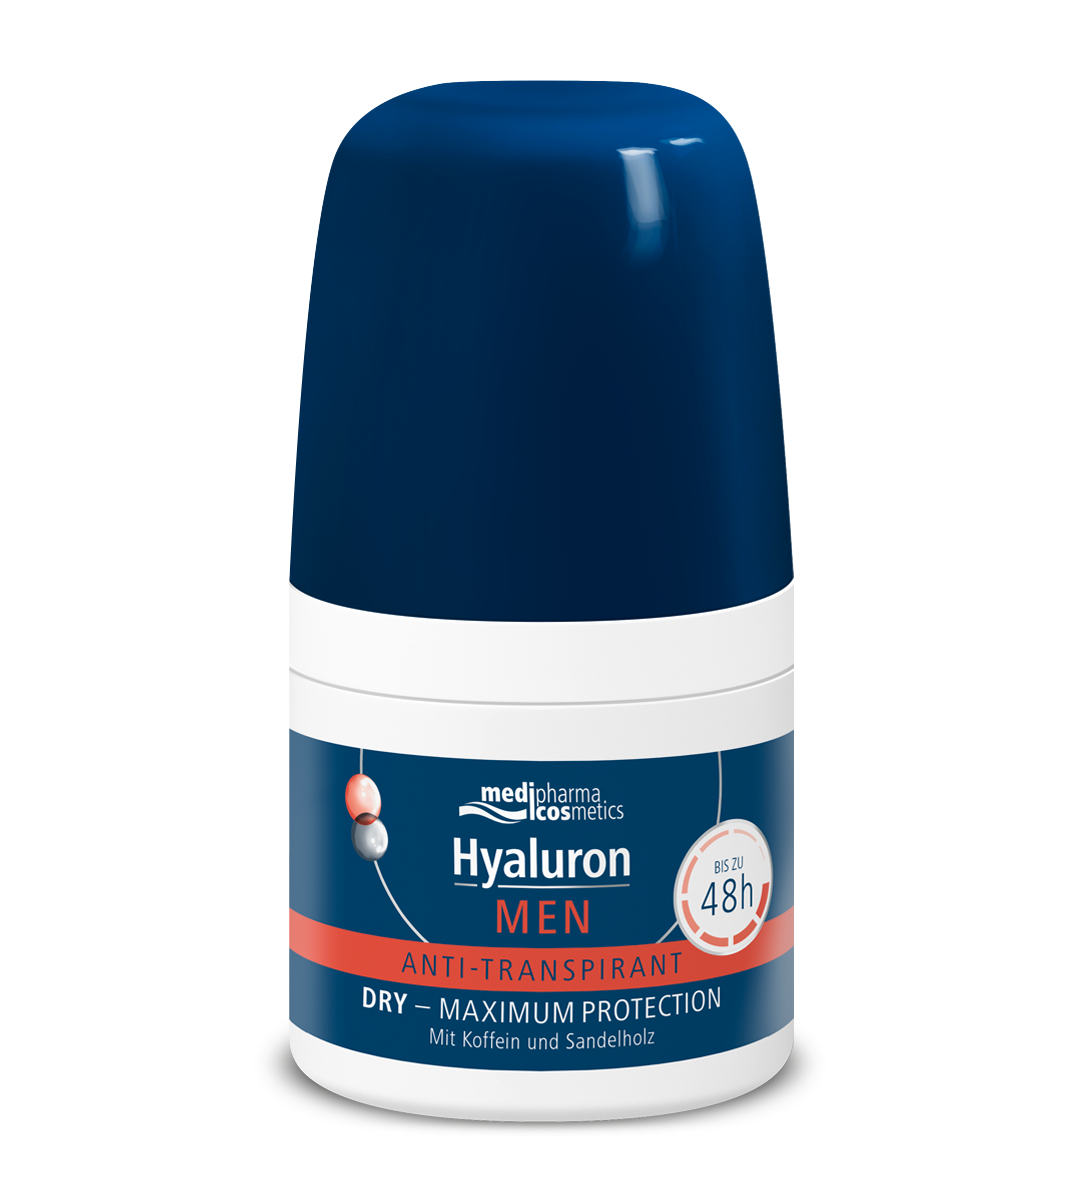 Hyaluron Men Anti-Transpirant